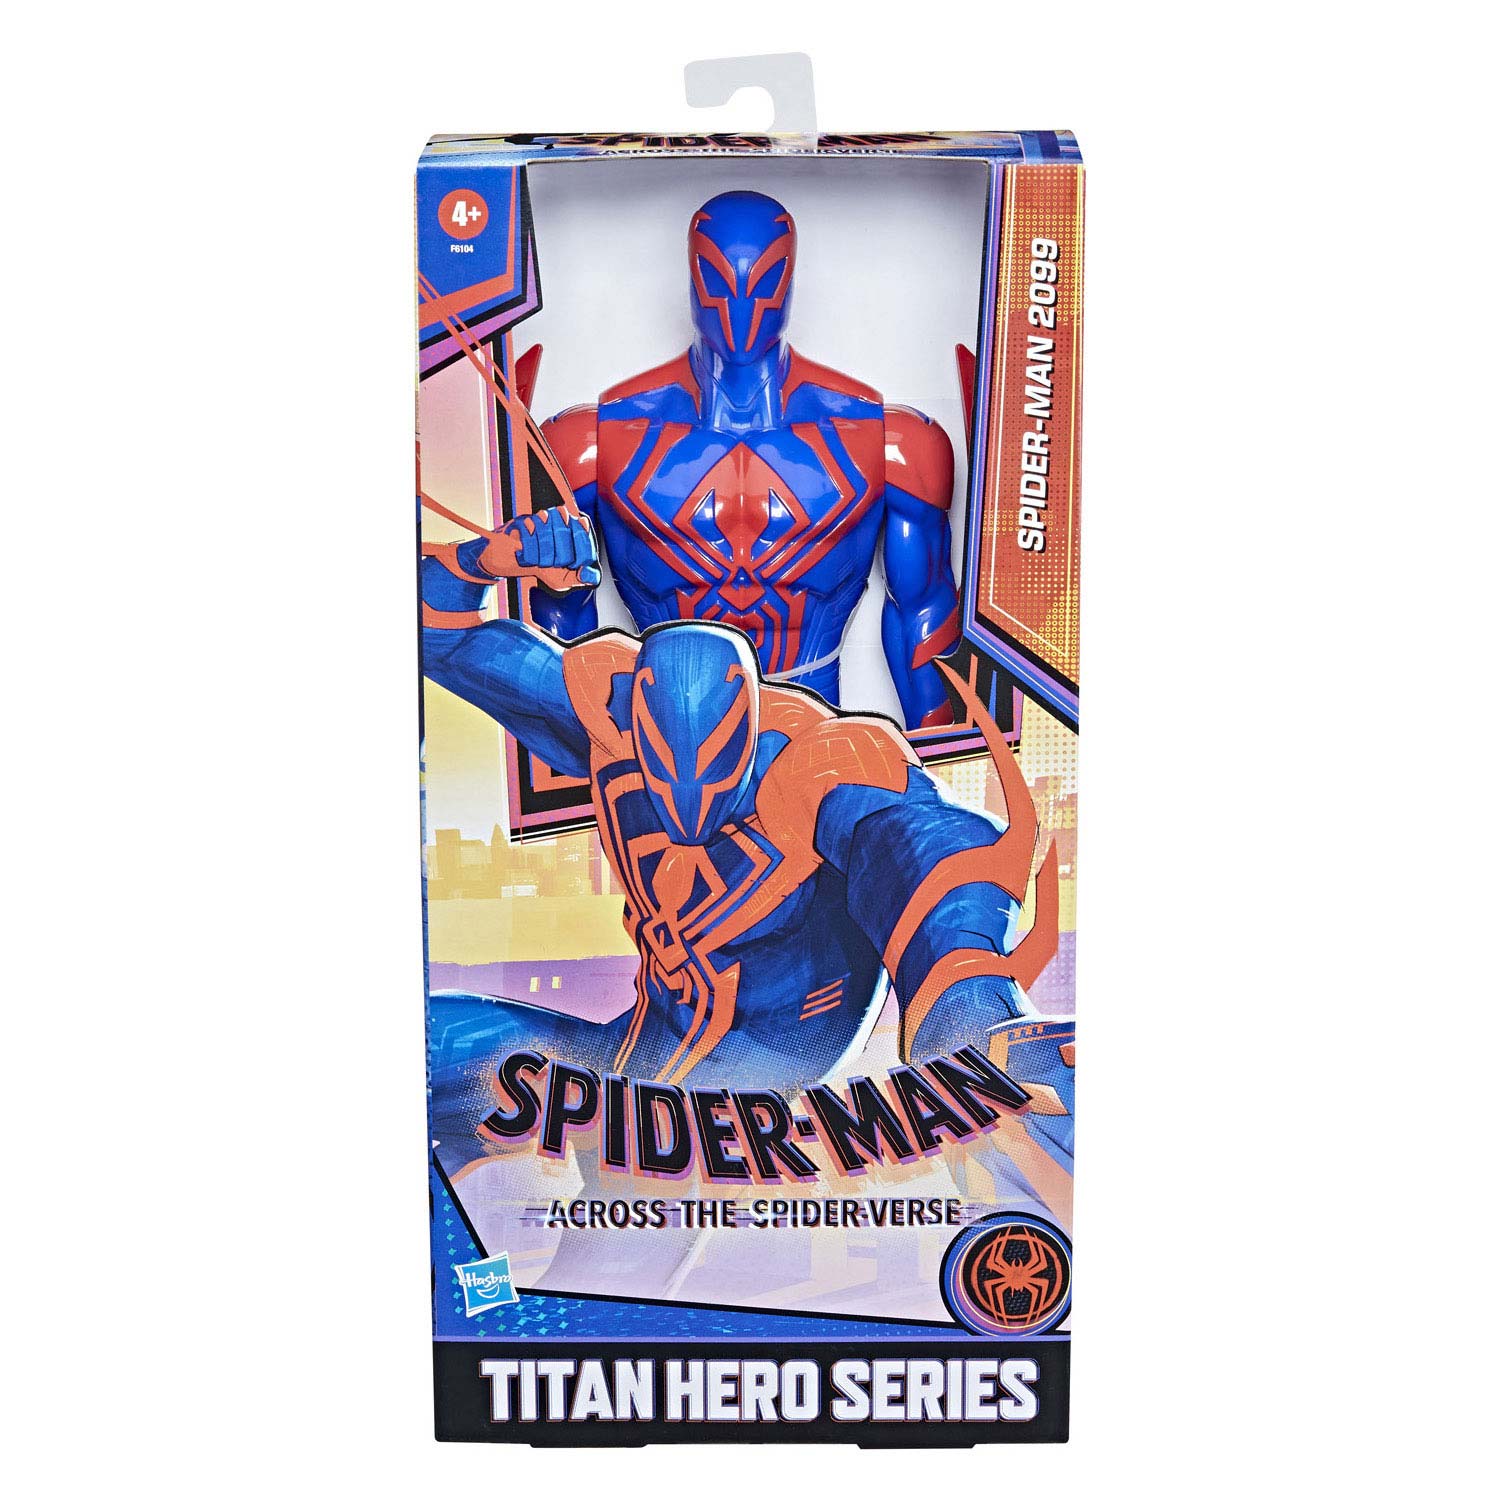 Figurine articulée Marvel Spider-Man 2099